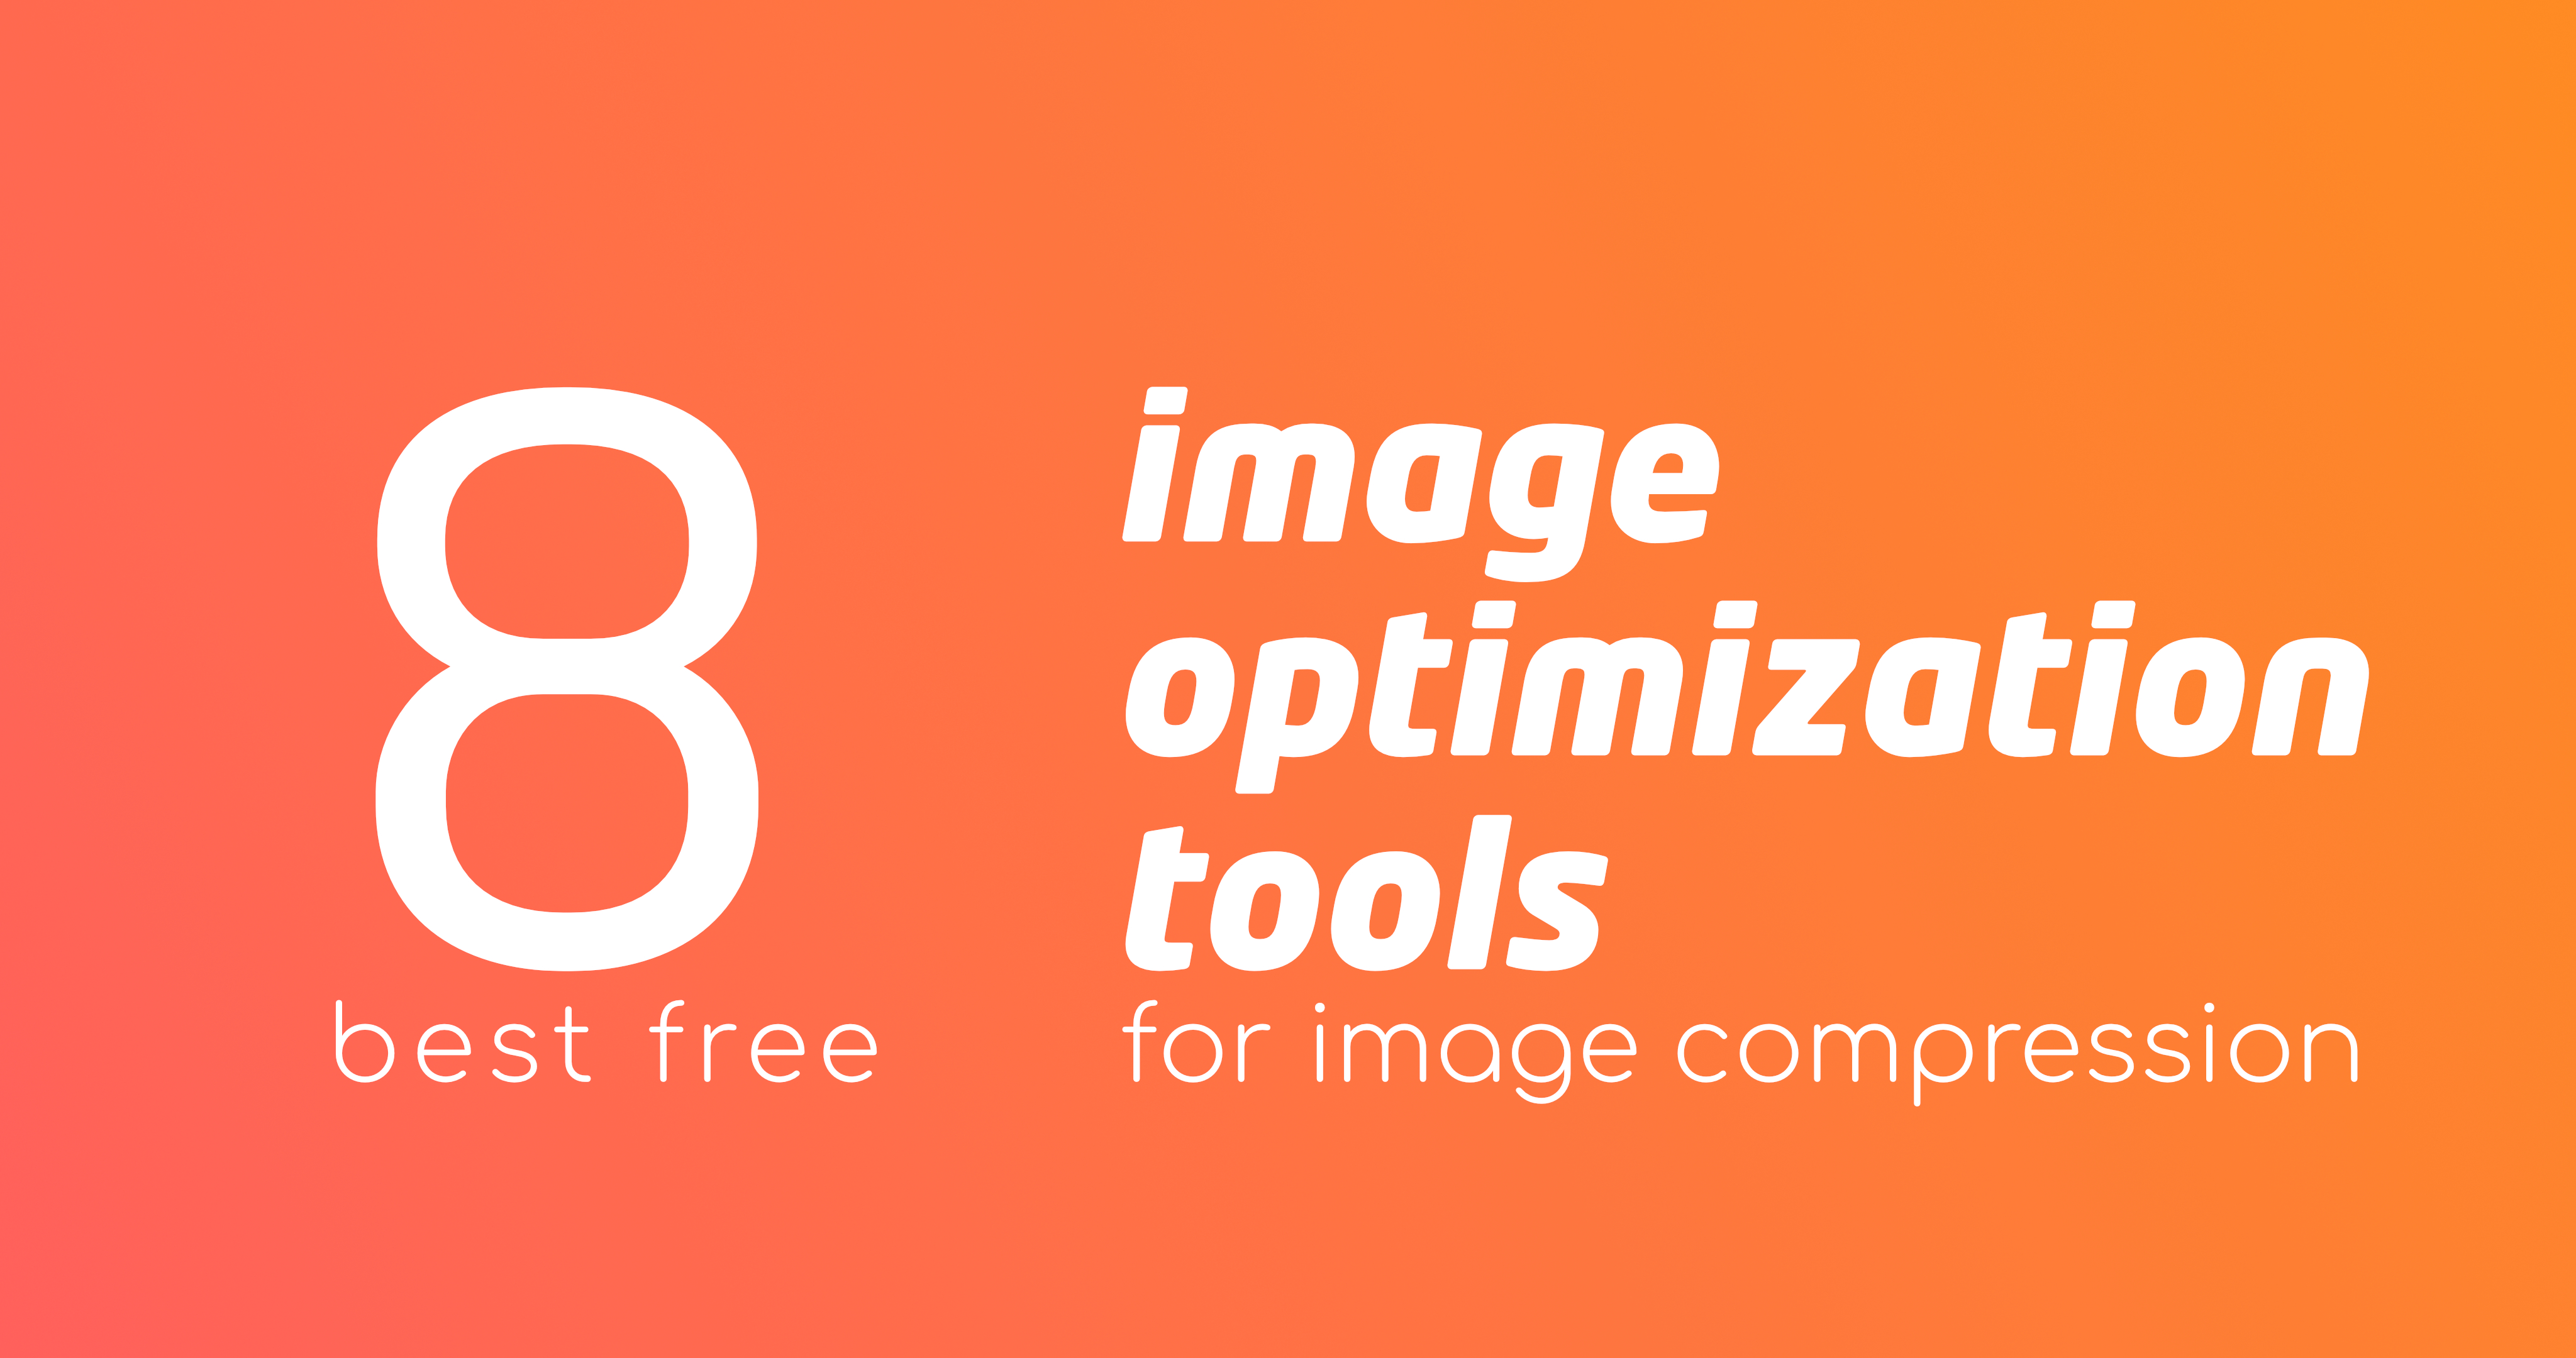 8 best free image optimization tools for image compression.jpg